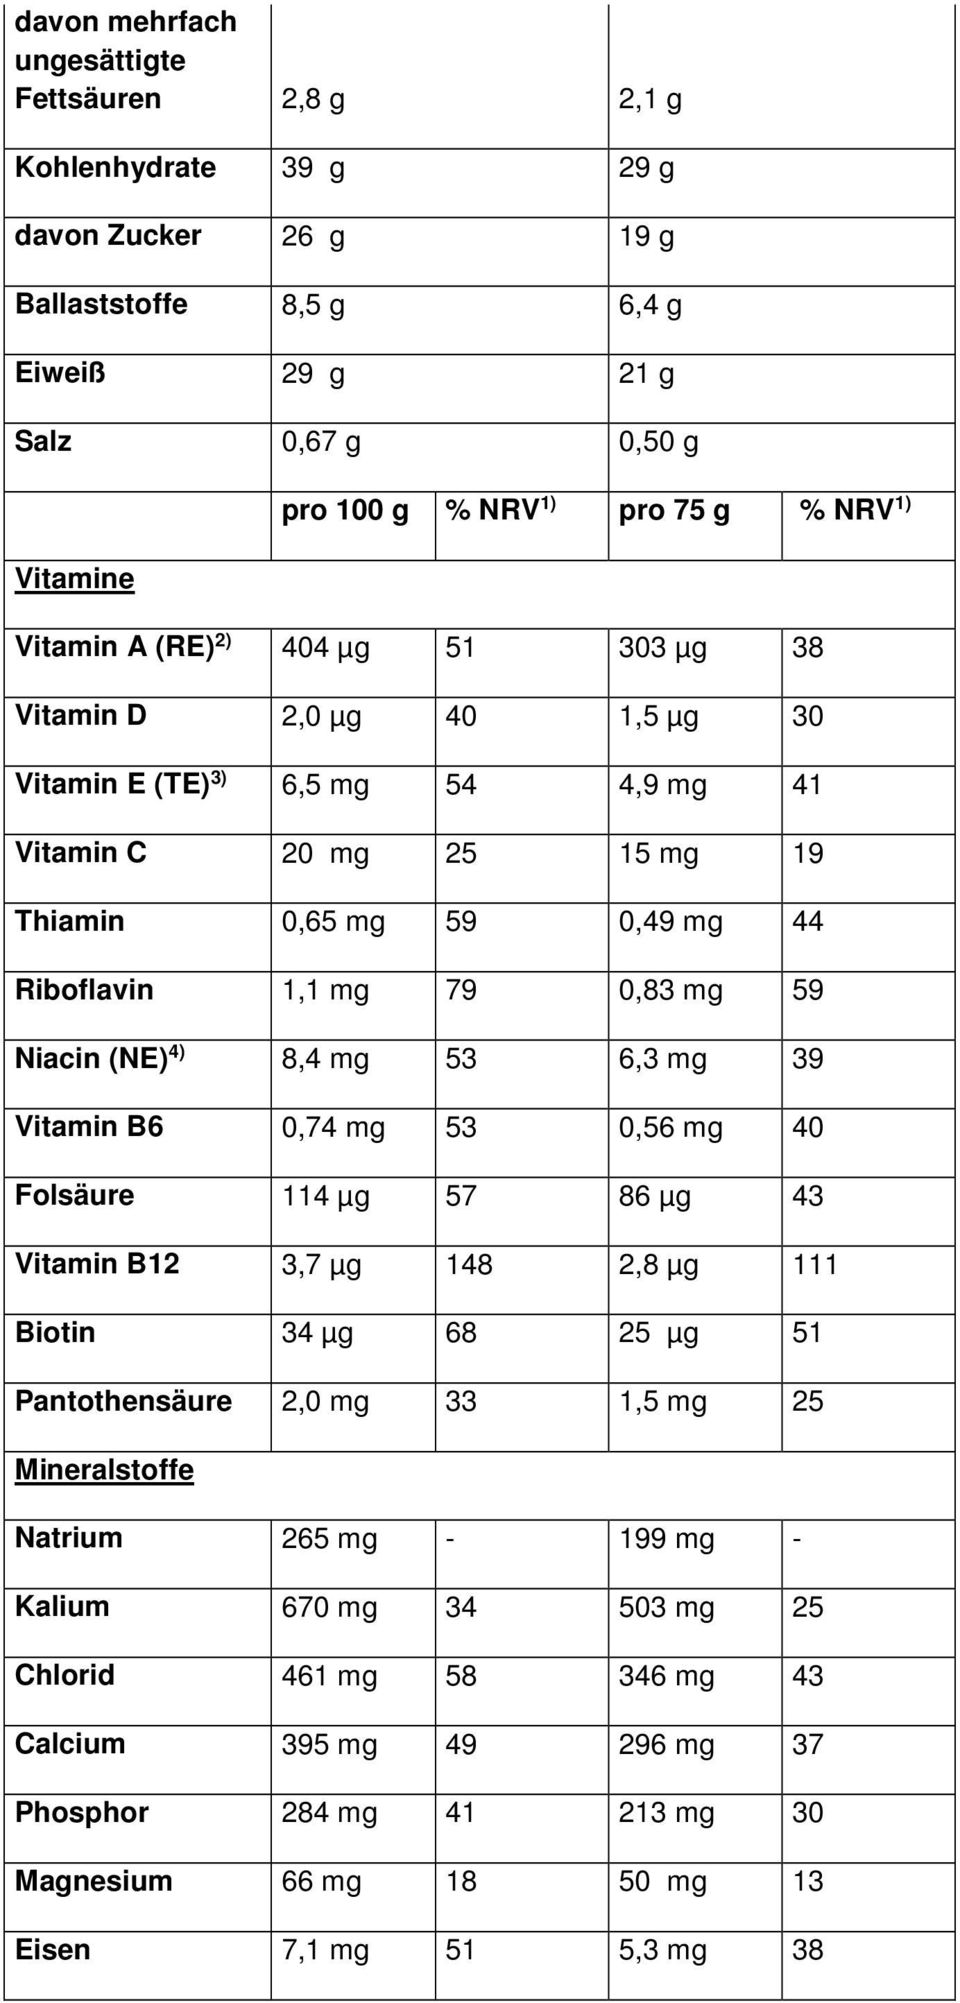 59 Niacin (NE) 4) 8,4 mg 53 6,3 mg 39 Vitamin B6 0,74 mg 53 0,56 mg 40 Folsäure 114 µg 57 86 µg 43 Vitamin B12 3,7 µg 148 2,8 µg 111 Biotin 34 µg 68 25 µg 51 Pantothensäure 2,0 mg 33 1,5 mg 25